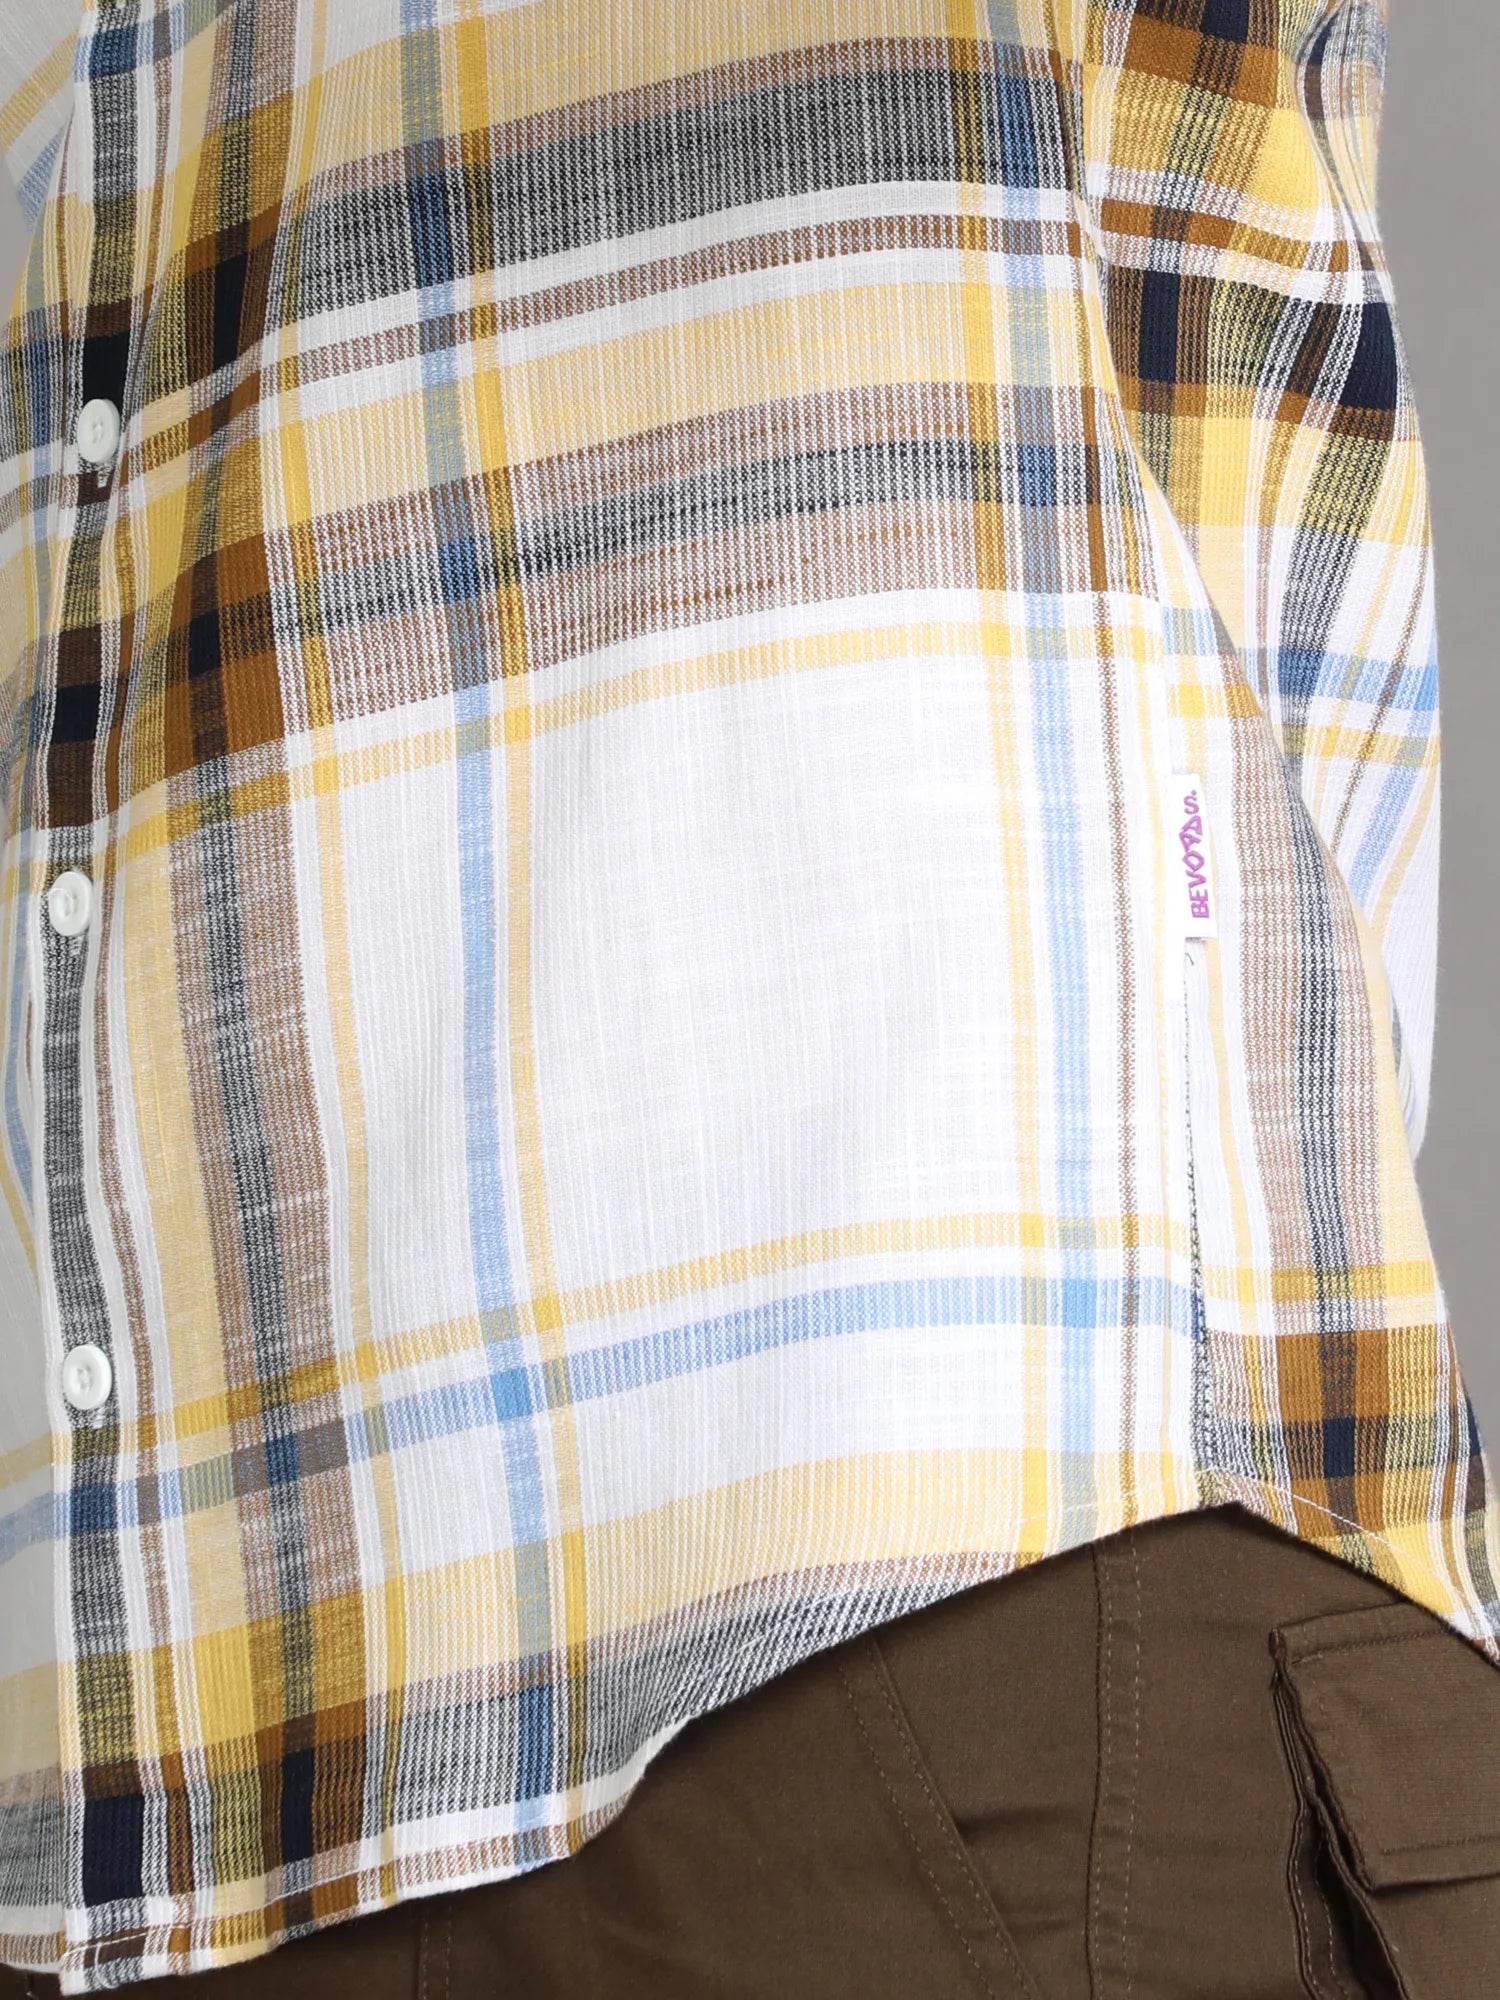 Yellow Checkered Shirt for Men 